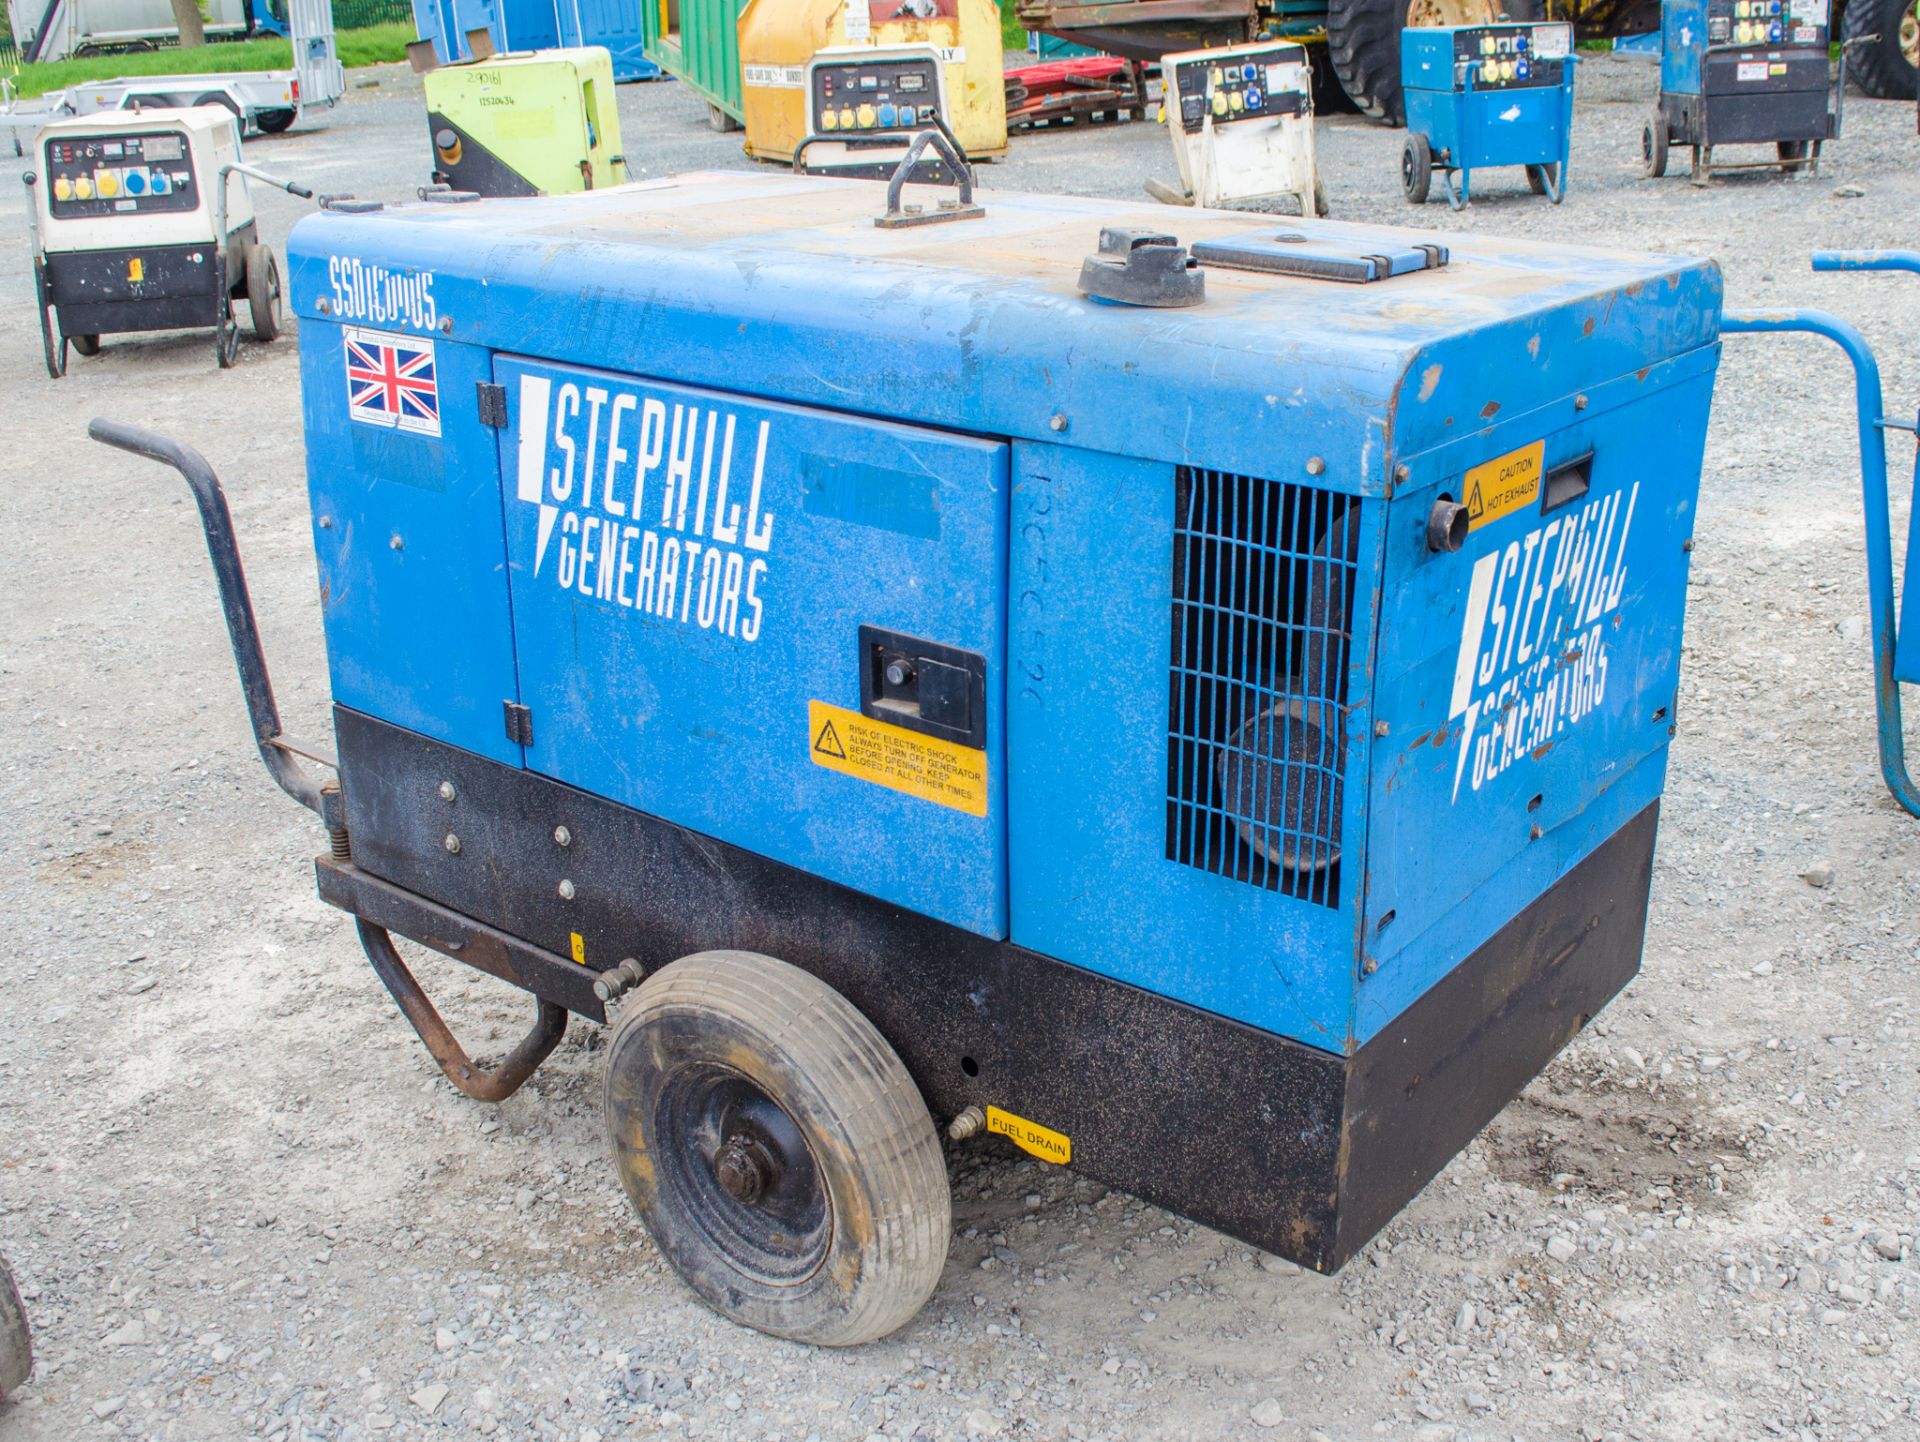 Stephill SSD10000S 10 kva diesel driven generator 1205-0520 - Image 2 of 5